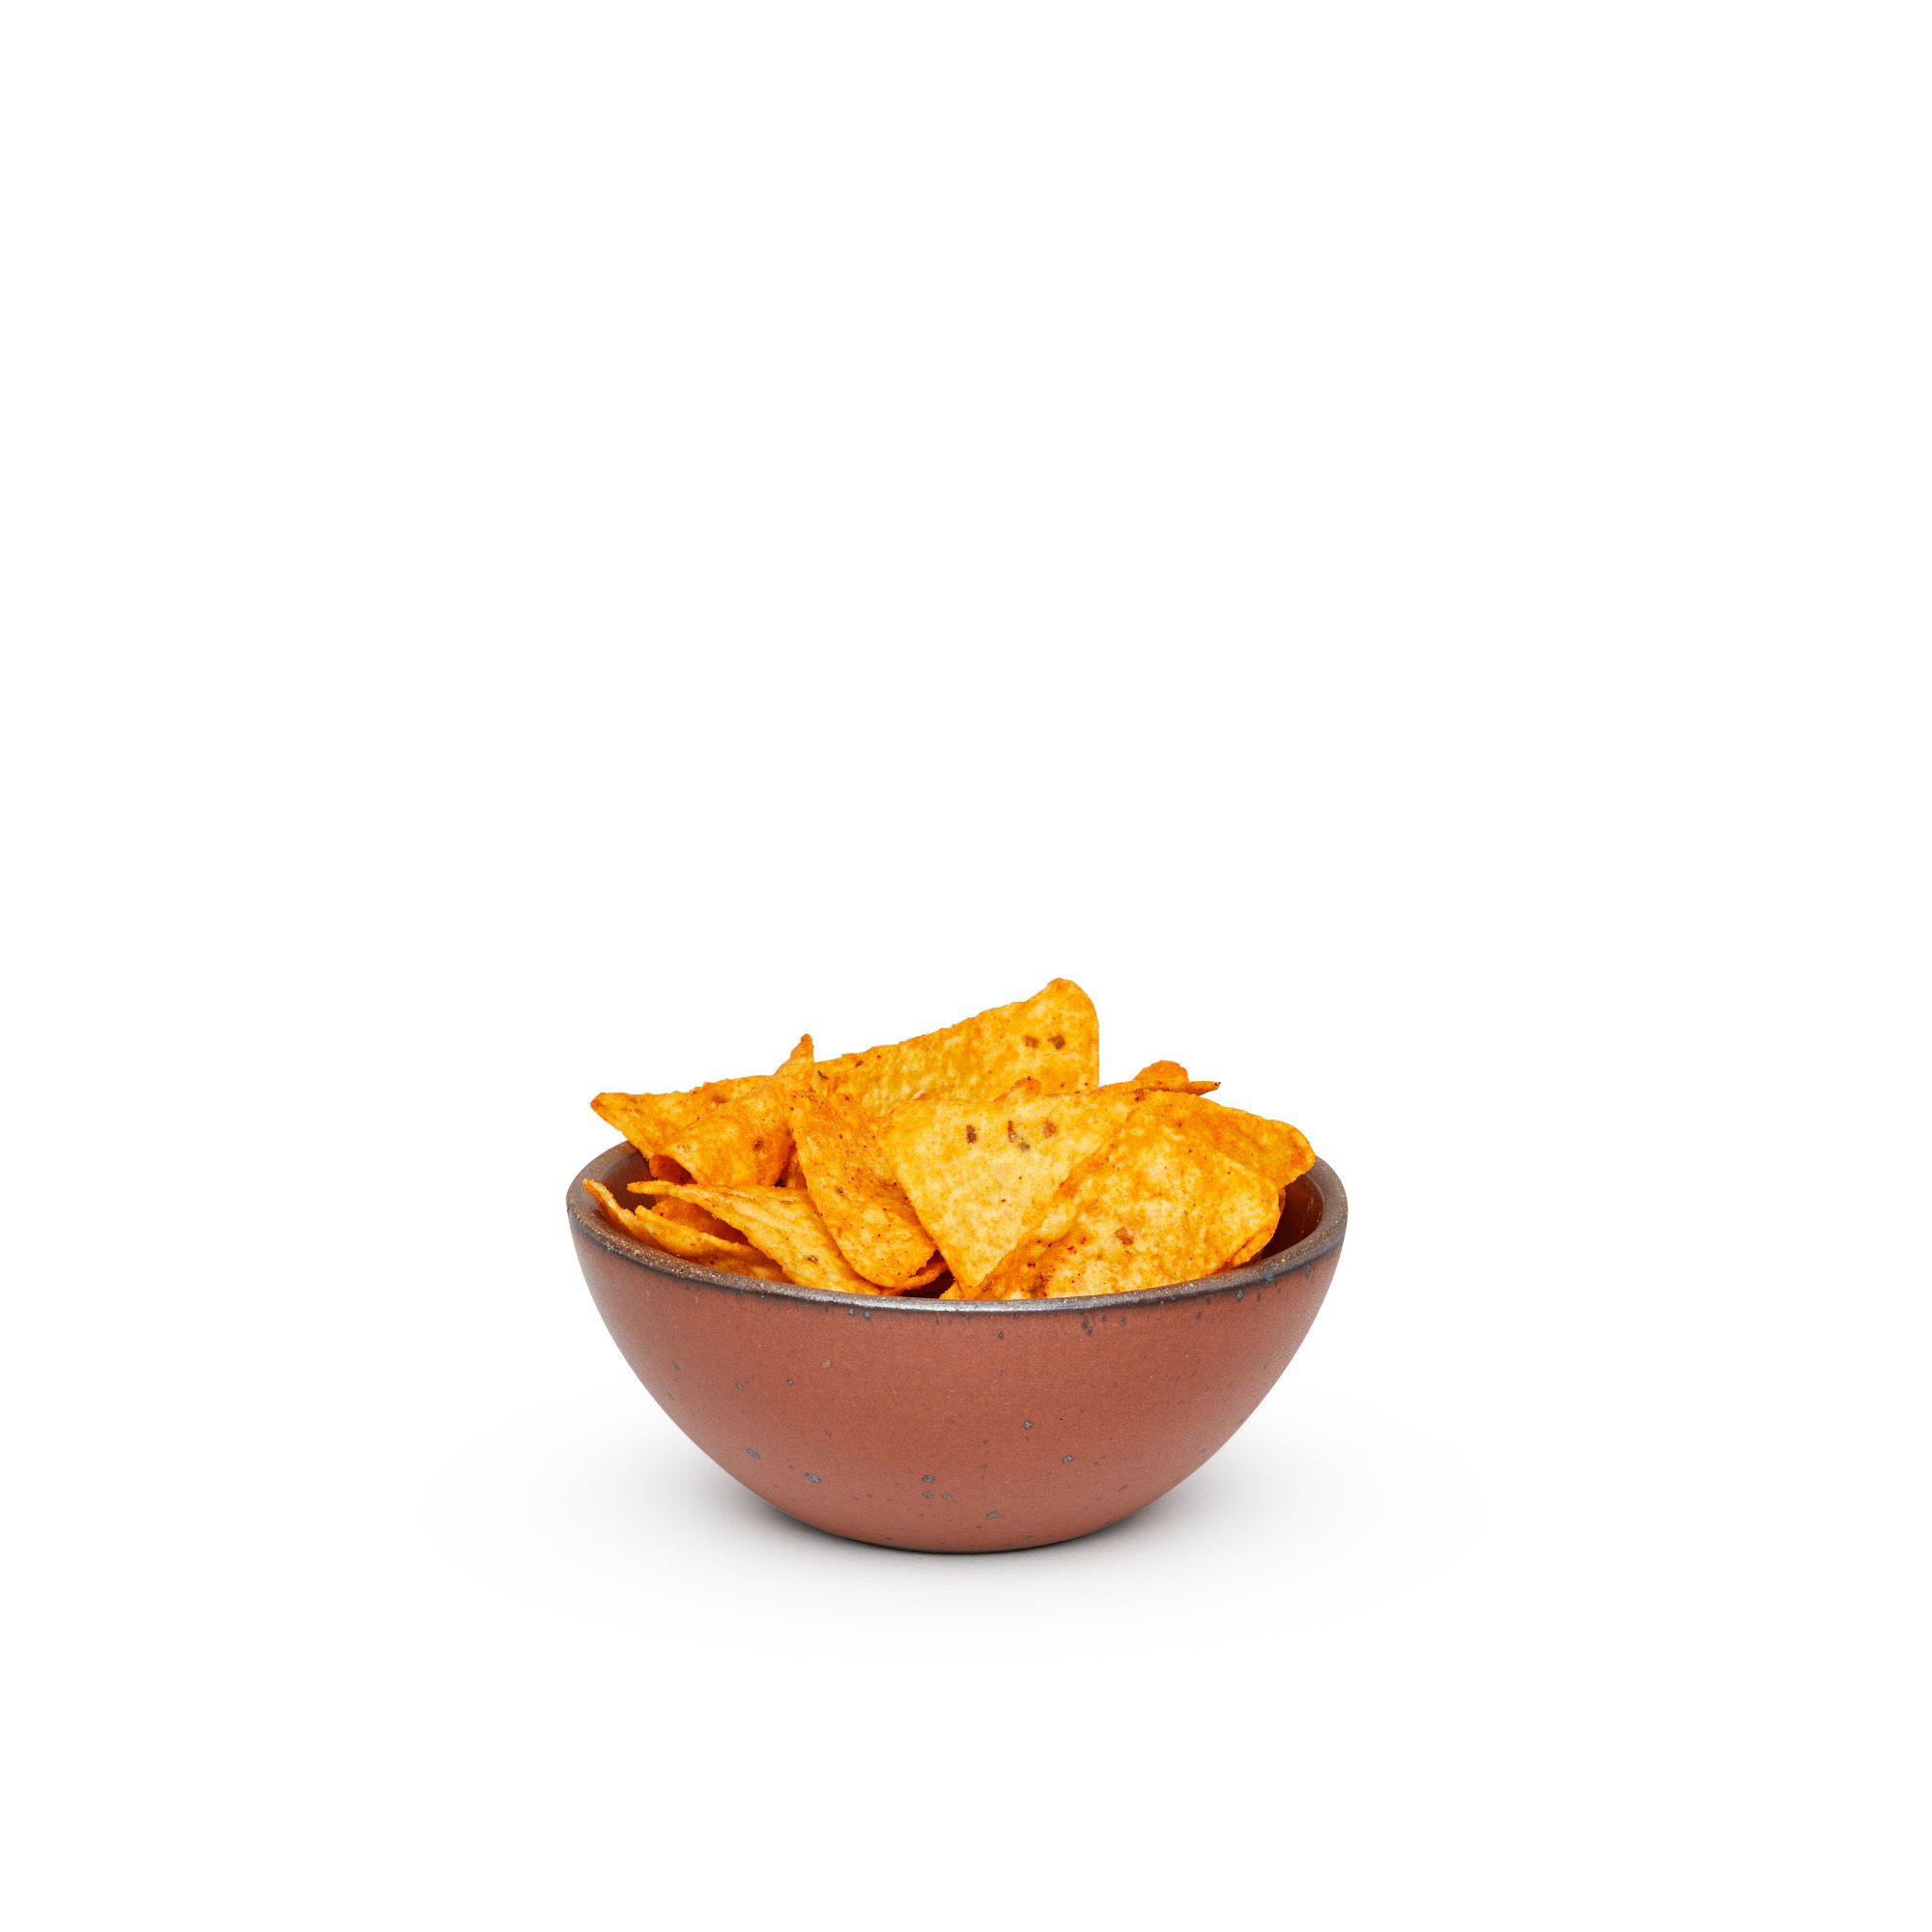 nacho cheese flavored chips sitting in amaro ice cream bowl